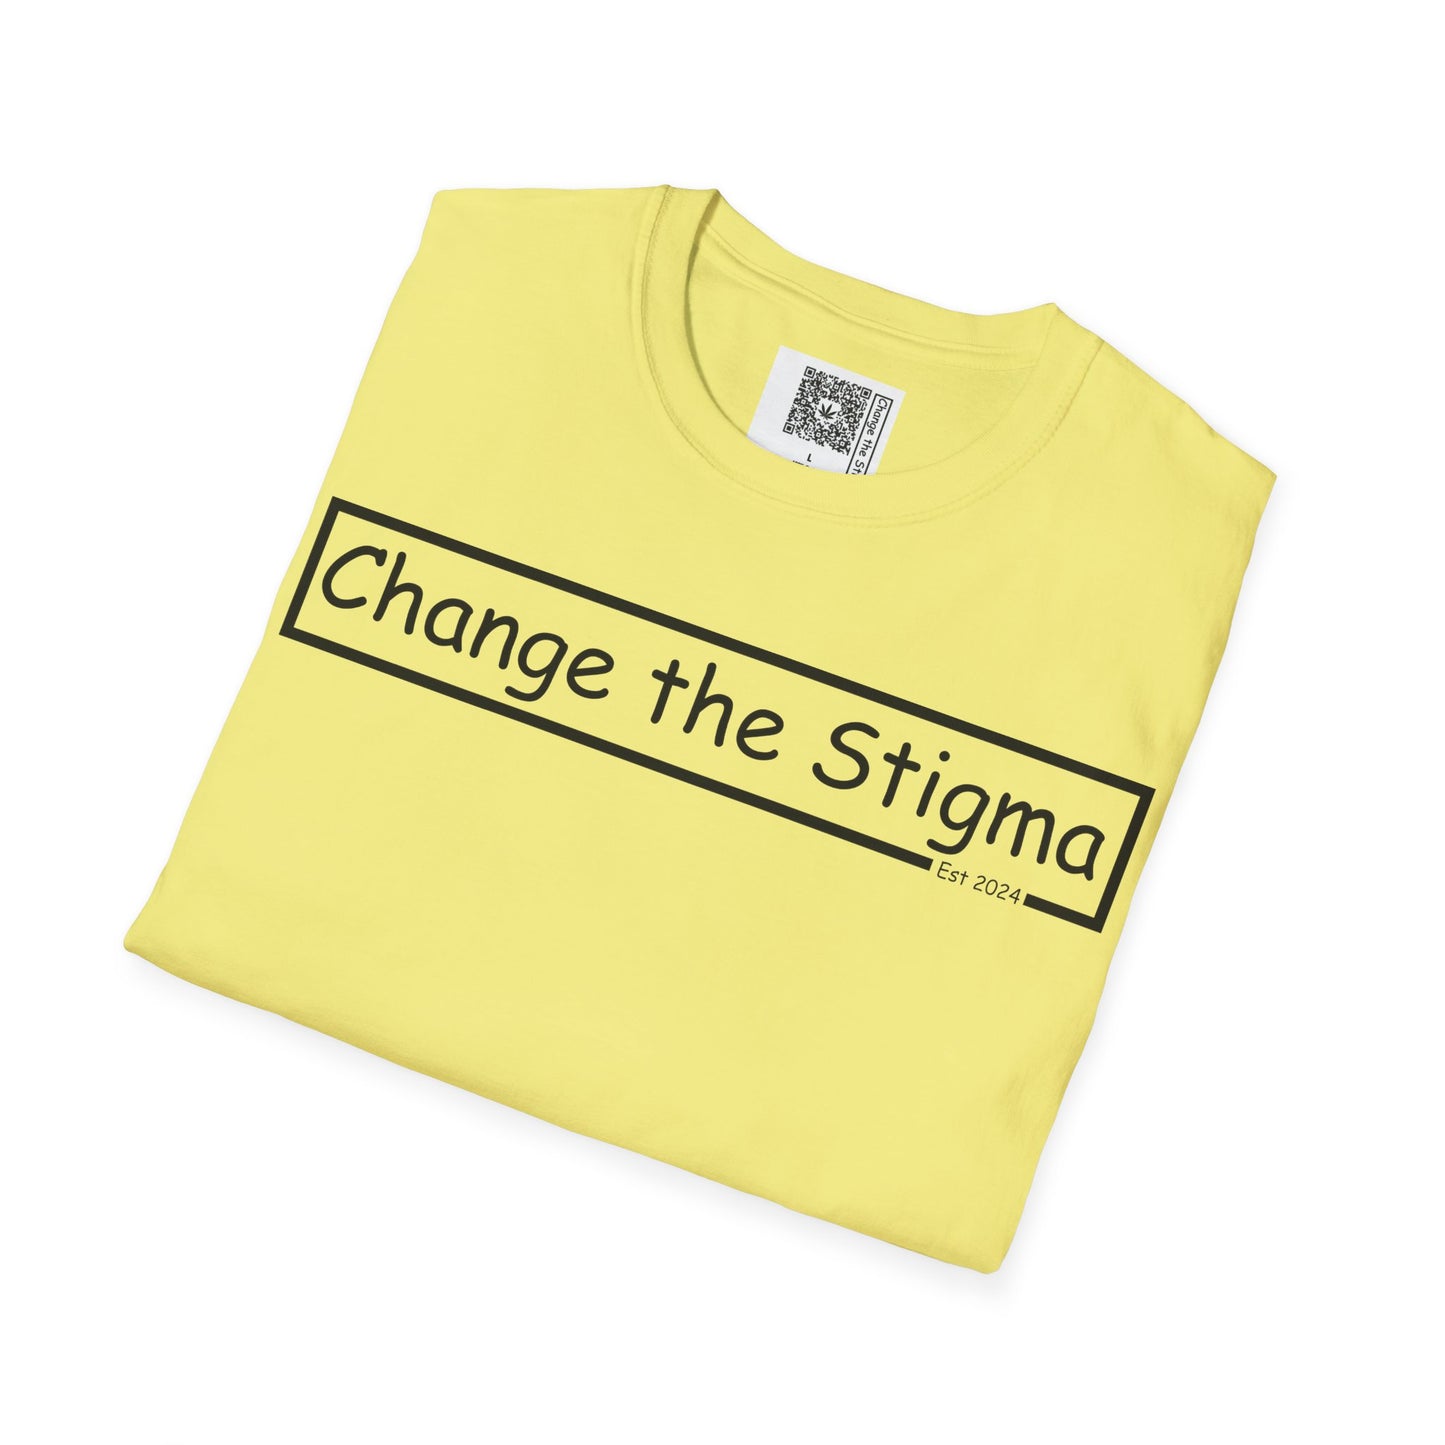 Change the Stigma Brand Blk Ltr Weed Shirt